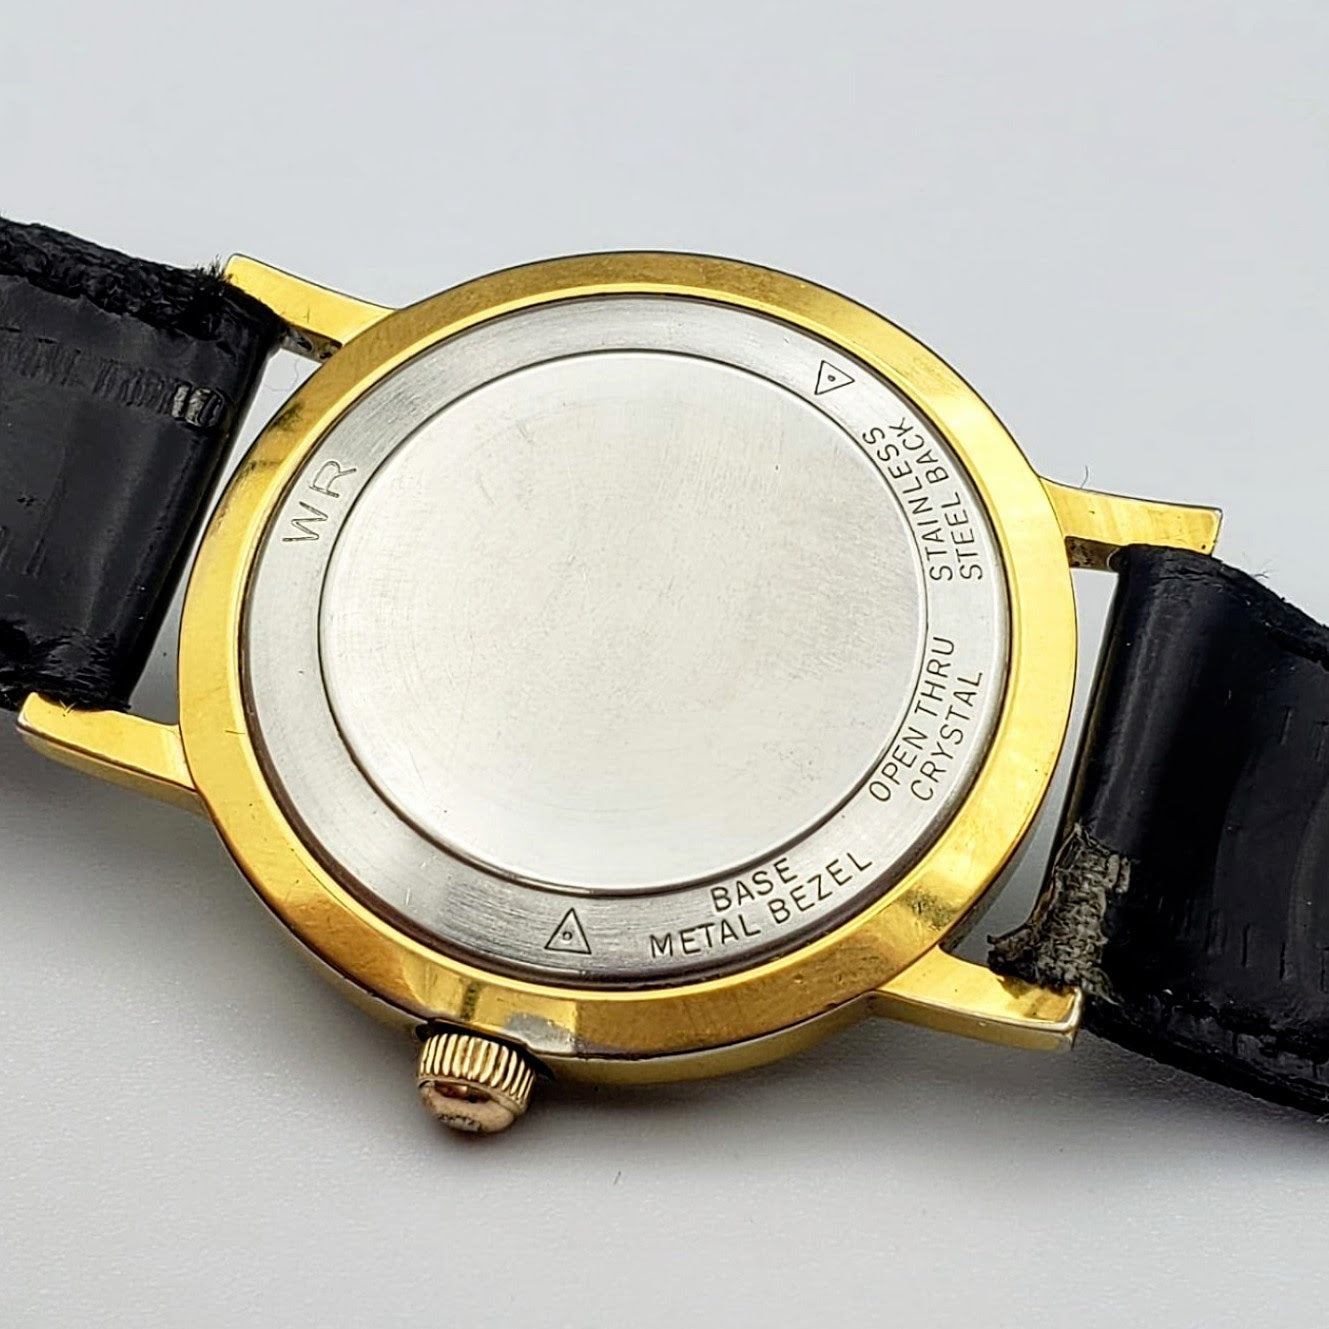 Vintage BELFORTE Wristwatch Luminous Indices and Hands Sunburst Dial 17 Jewels Watch